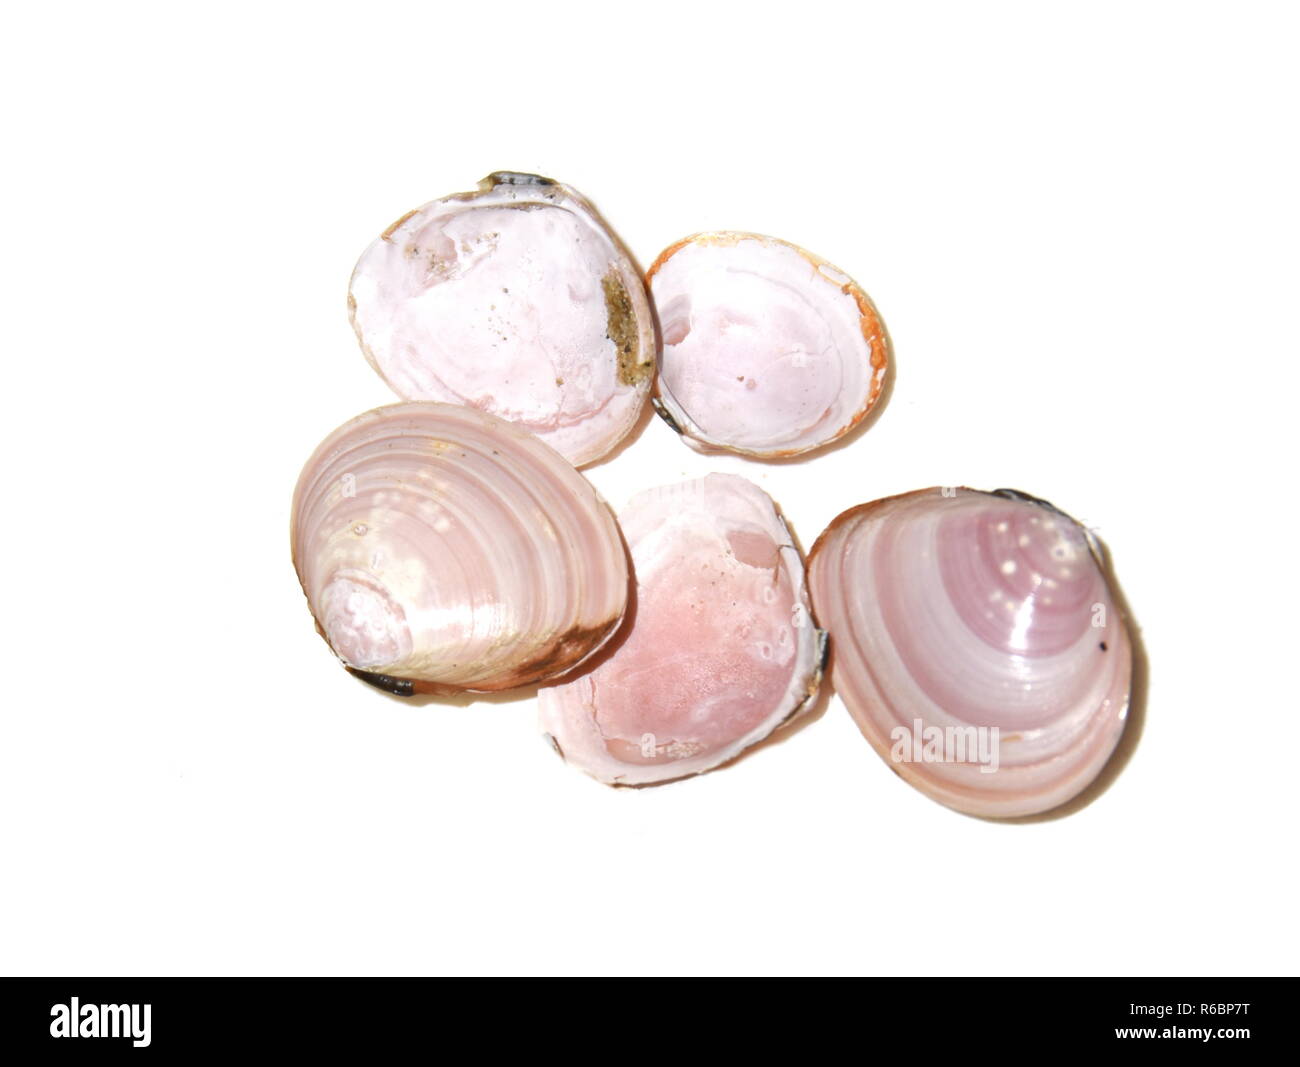 Shells from the bivalve mollusk Baltic macoma Stock Photo